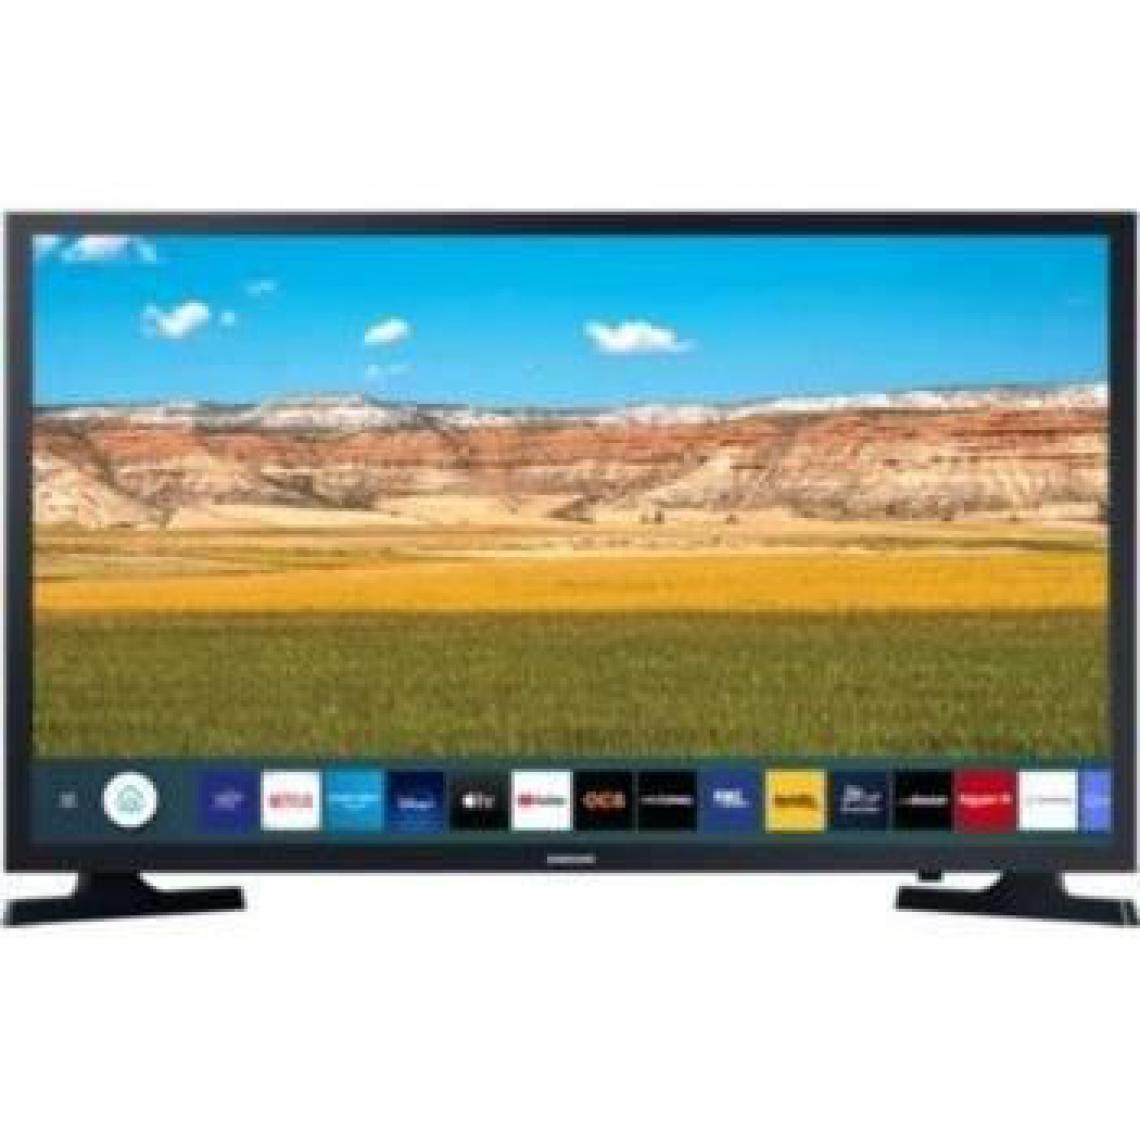 Samsung - SAMSUNG 32T4302 -TV LED HD 32 (81cm) - Smart TV - 2 x HDMI, 1 x USB - Classe A+ - TV 32'' et moins